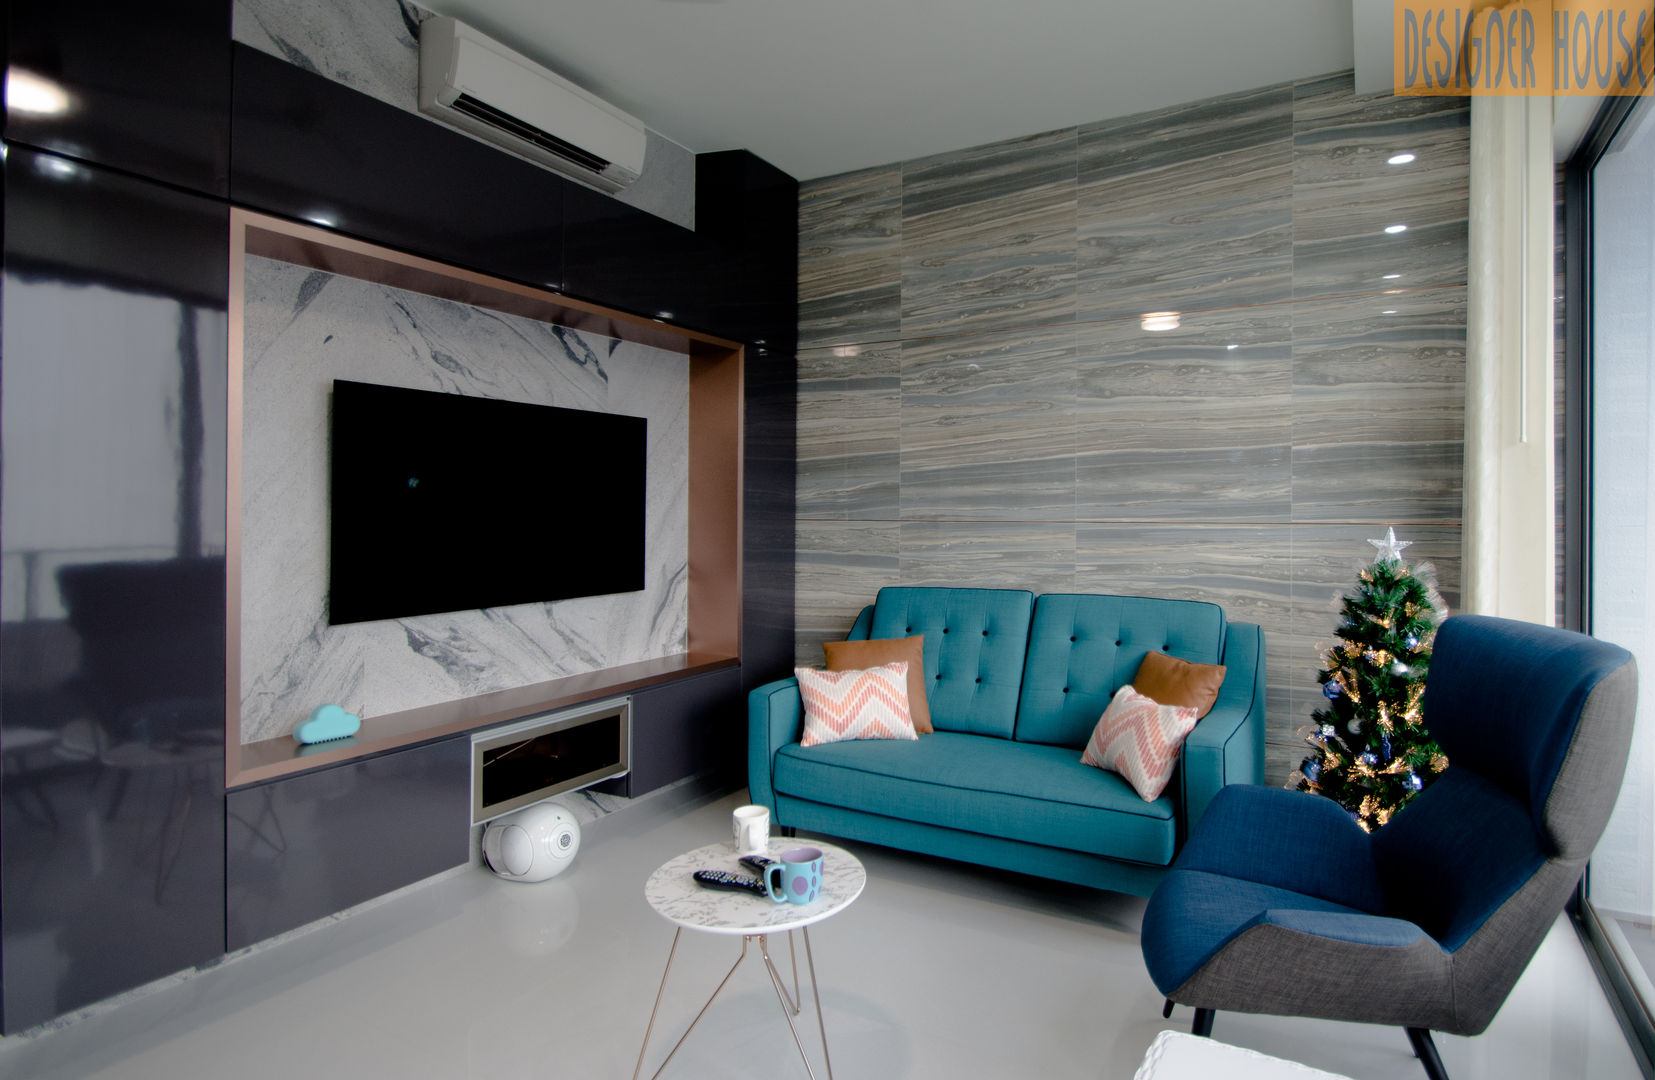 Barley Ridge Penthouse Project, Designer House Designer House Salas de estar modernas Pedra Calcária